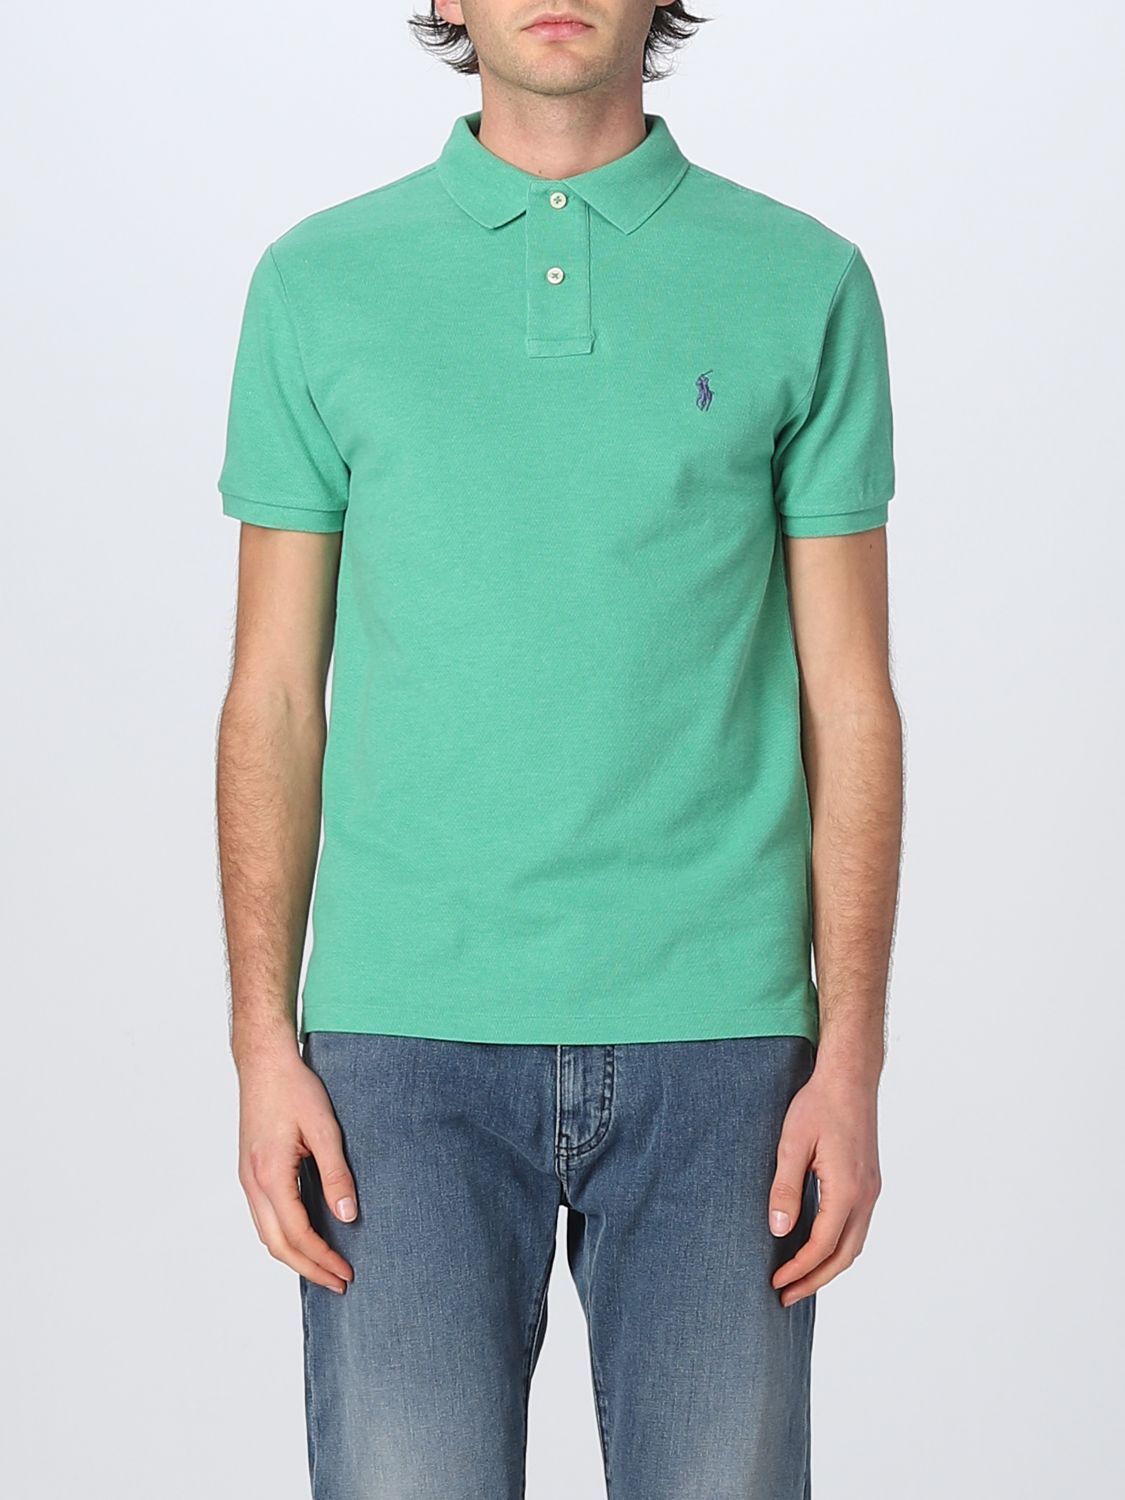 Polo Ralph Lauren Outlet: polo shirt for man - Forest Green  Polo Ralph  Lauren polo shirt 710536856 online at